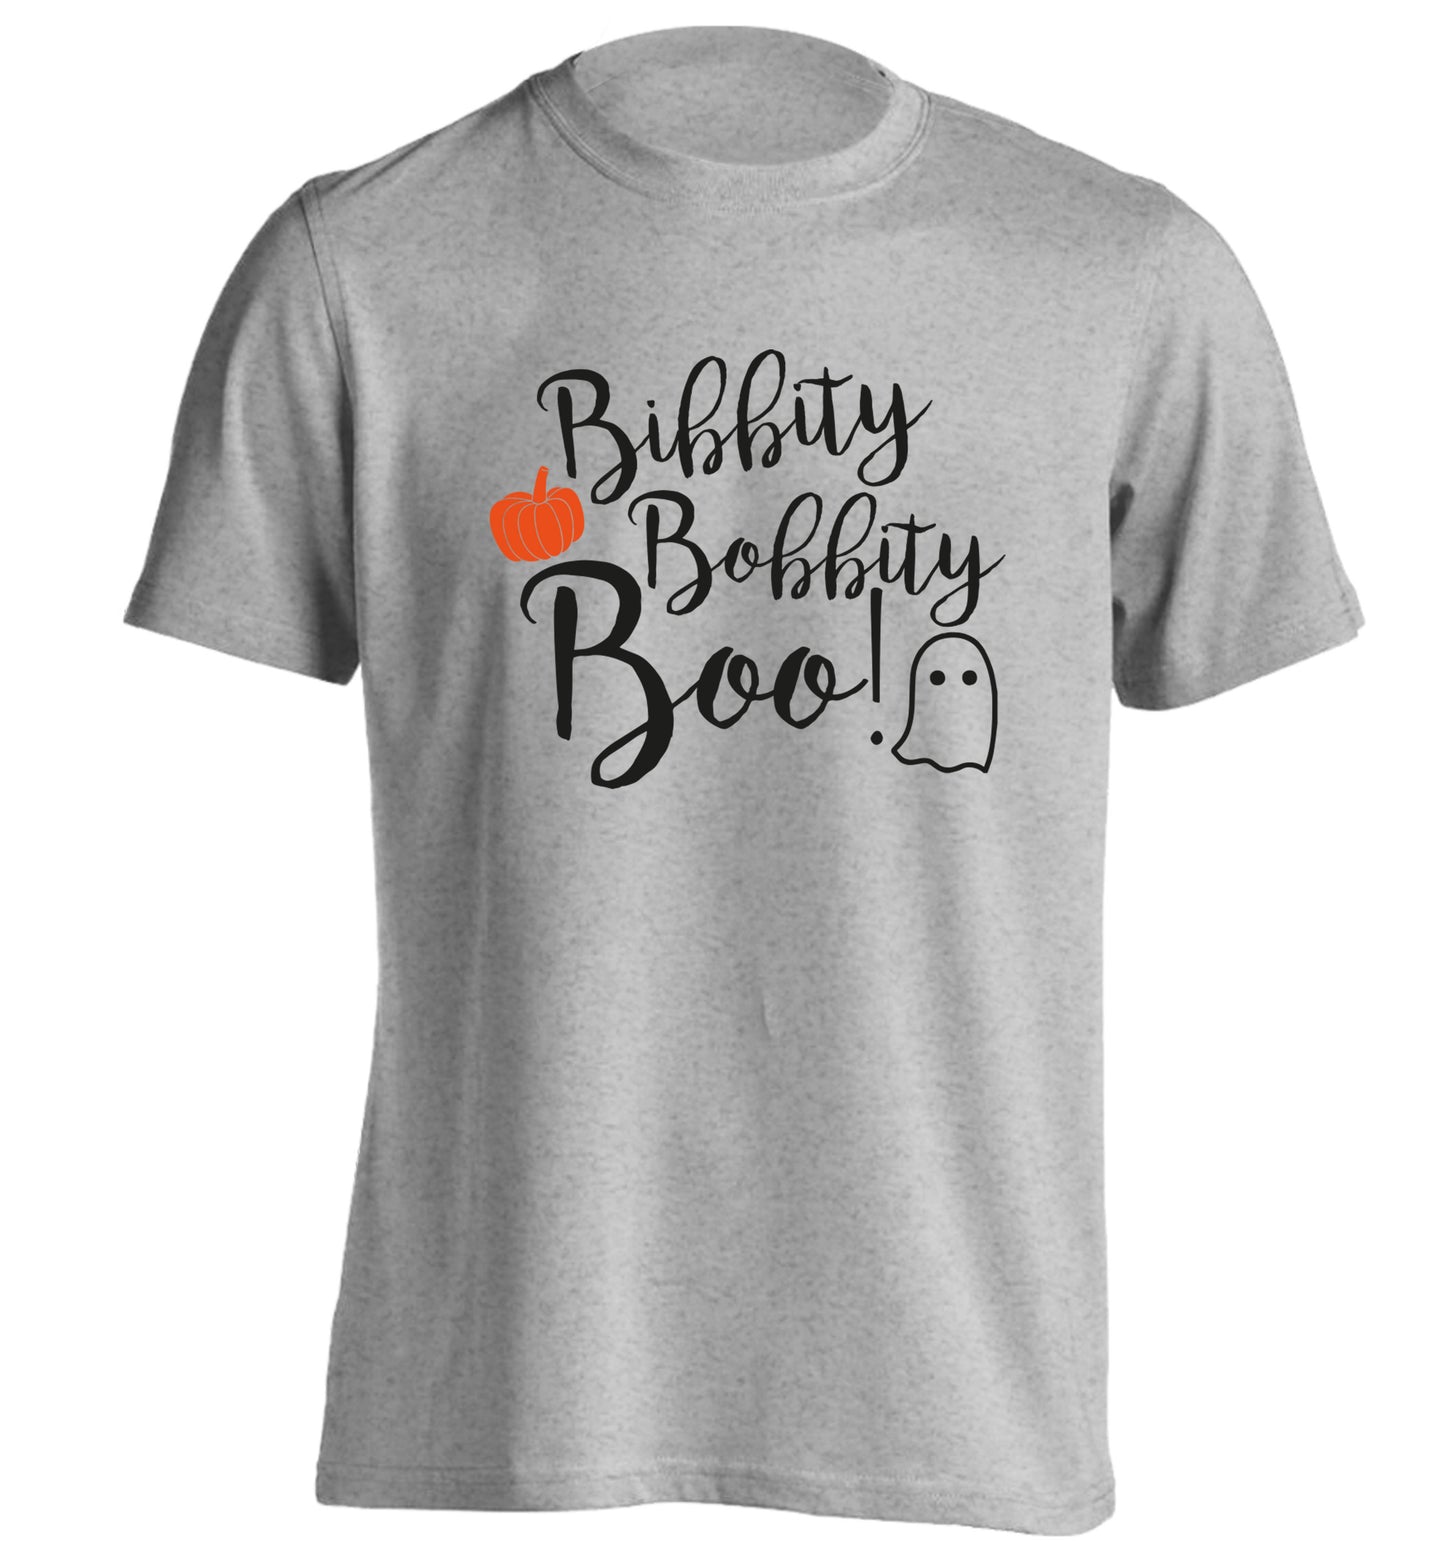 Bibbity bobbity boo! adults unisex grey Tshirt 2XL